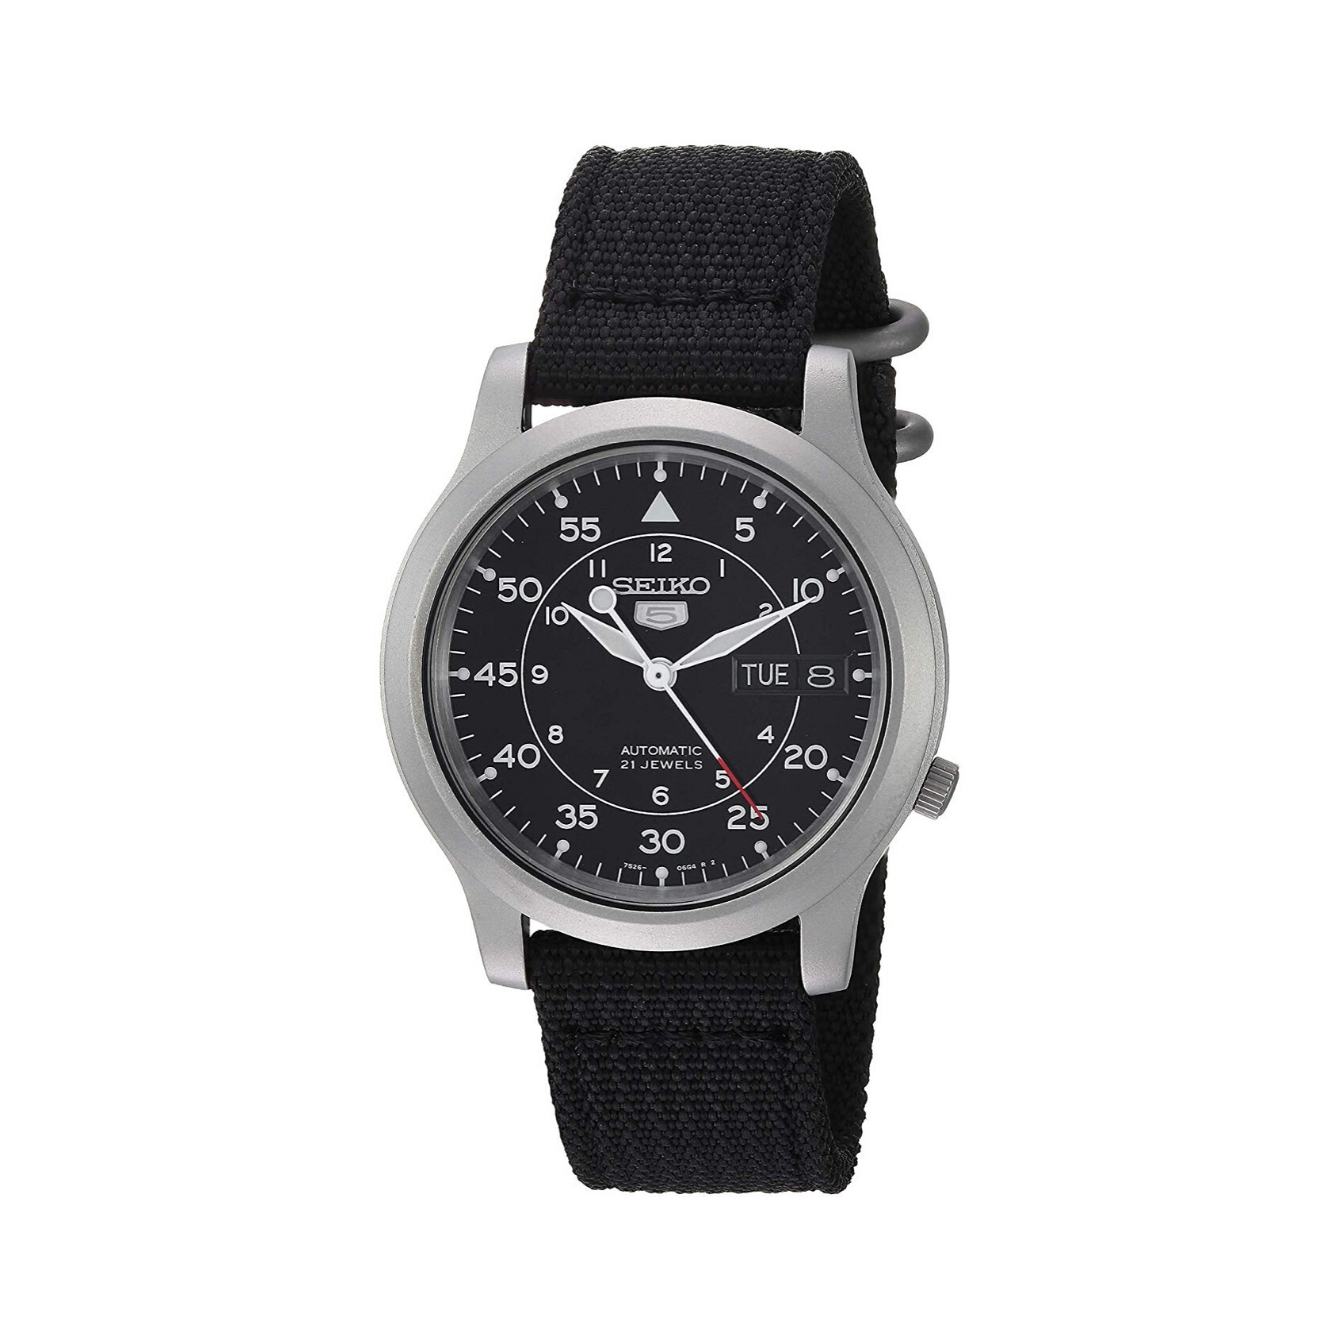 Seiko SNK809 watch